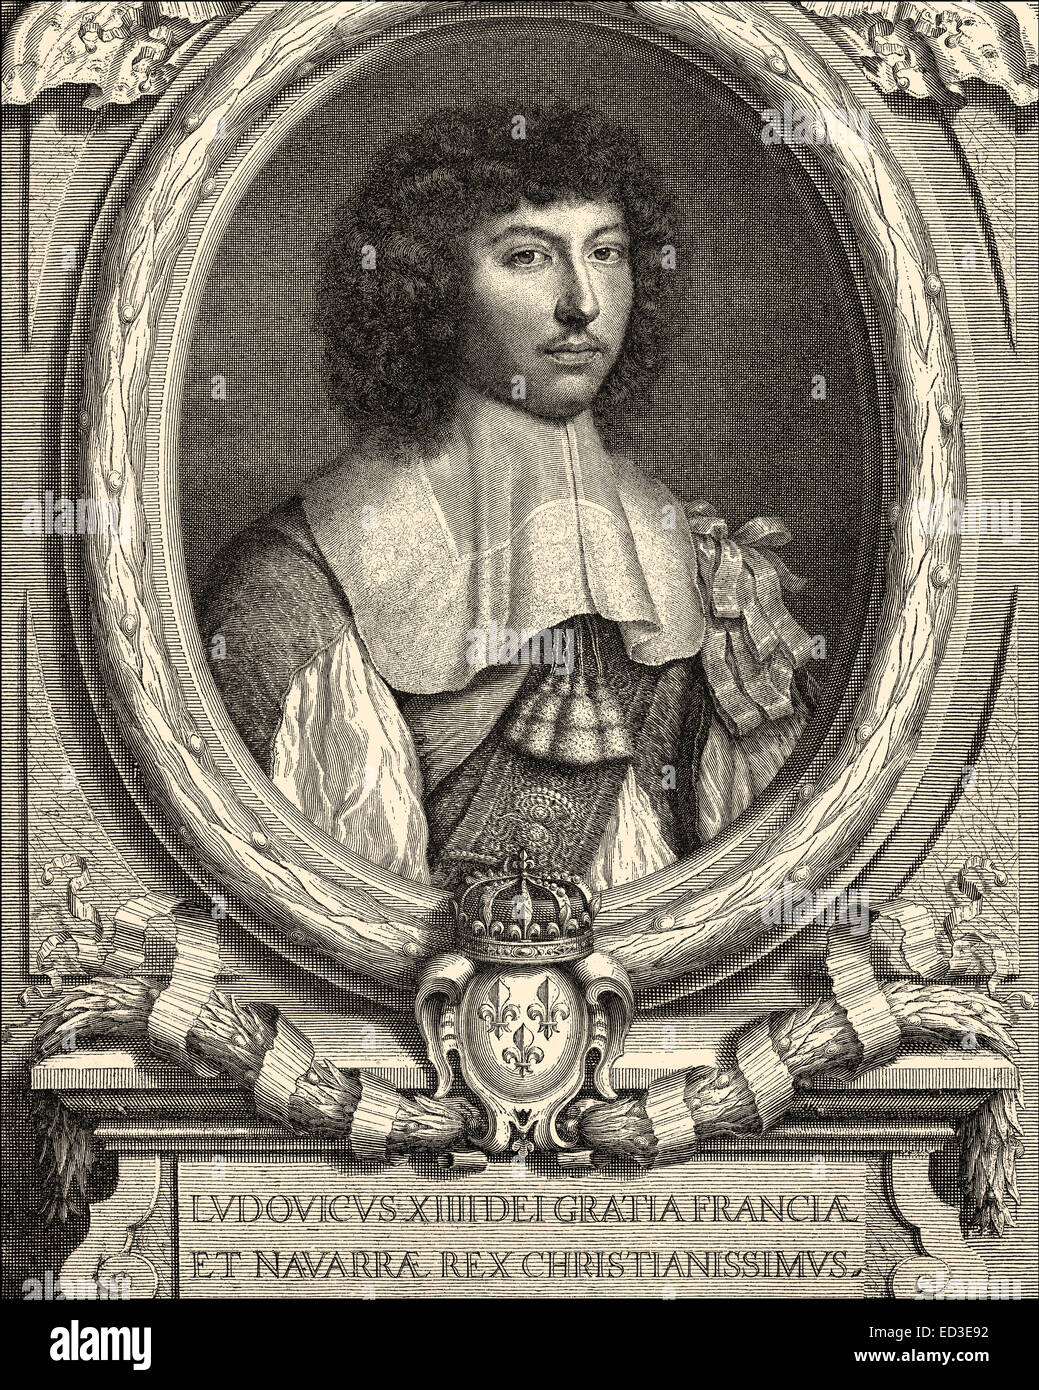 Portrait of Louis XIV, Louis le Grand, 1638 - 1715, King of France Stock Photo: 76909086 - Alamy